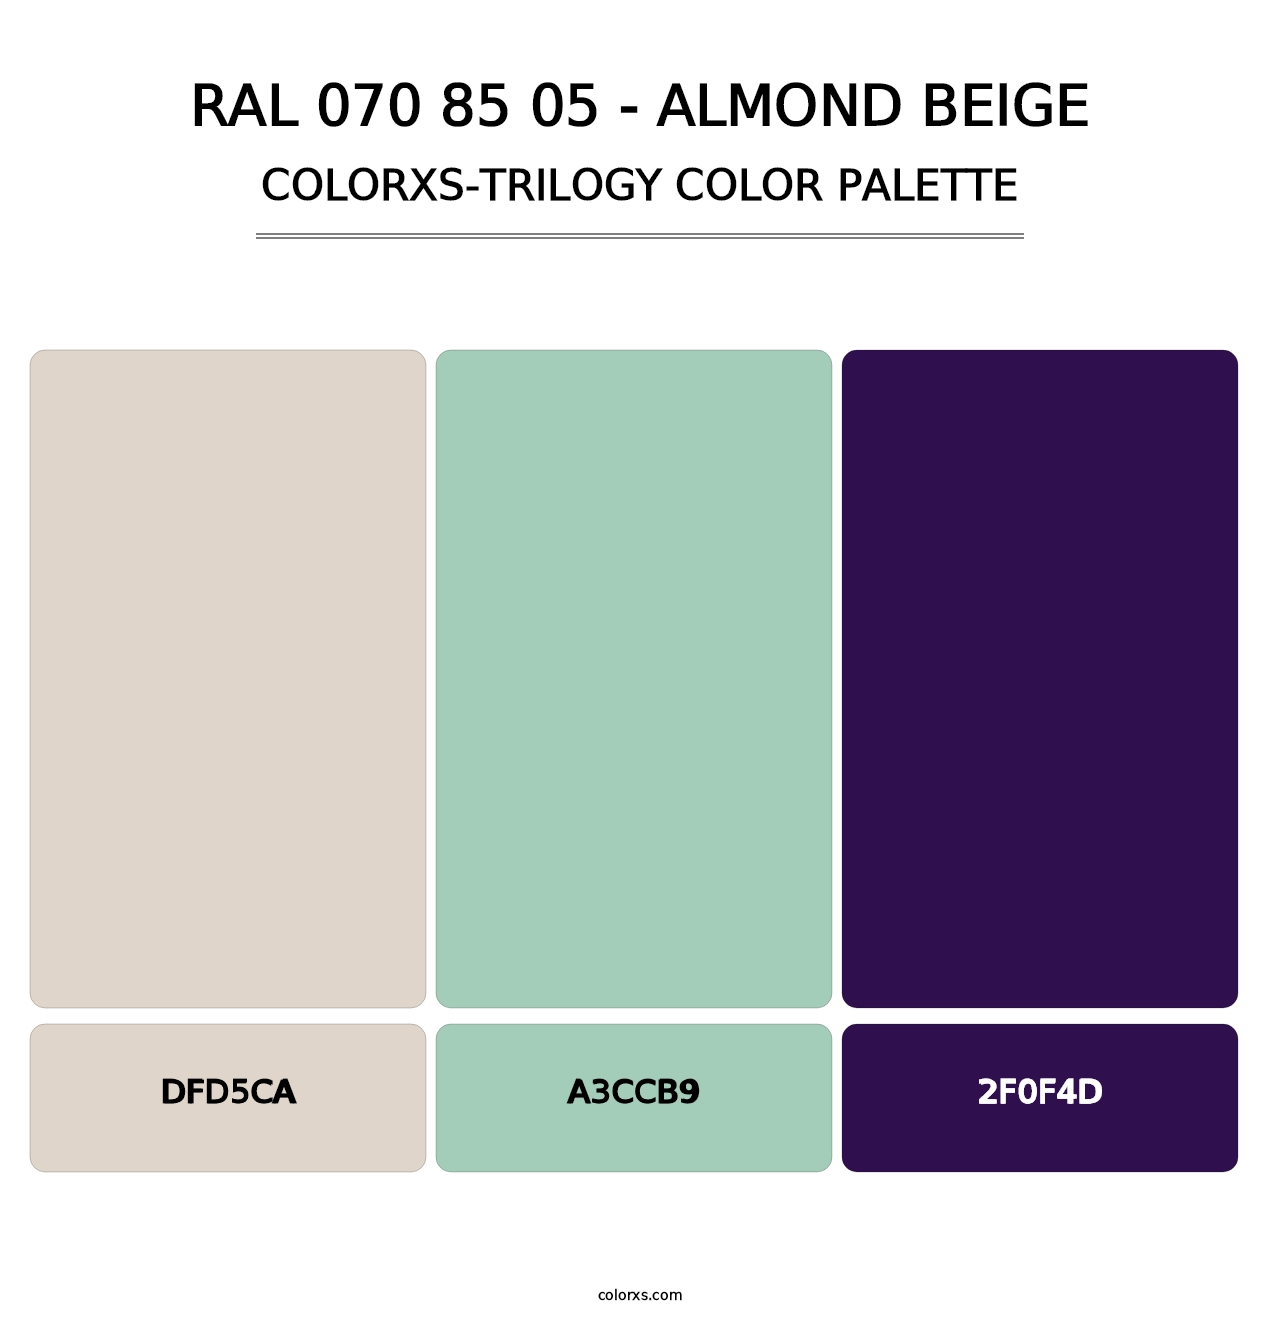 RAL 070 85 05 - Almond Beige - Colorxs Trilogy Palette